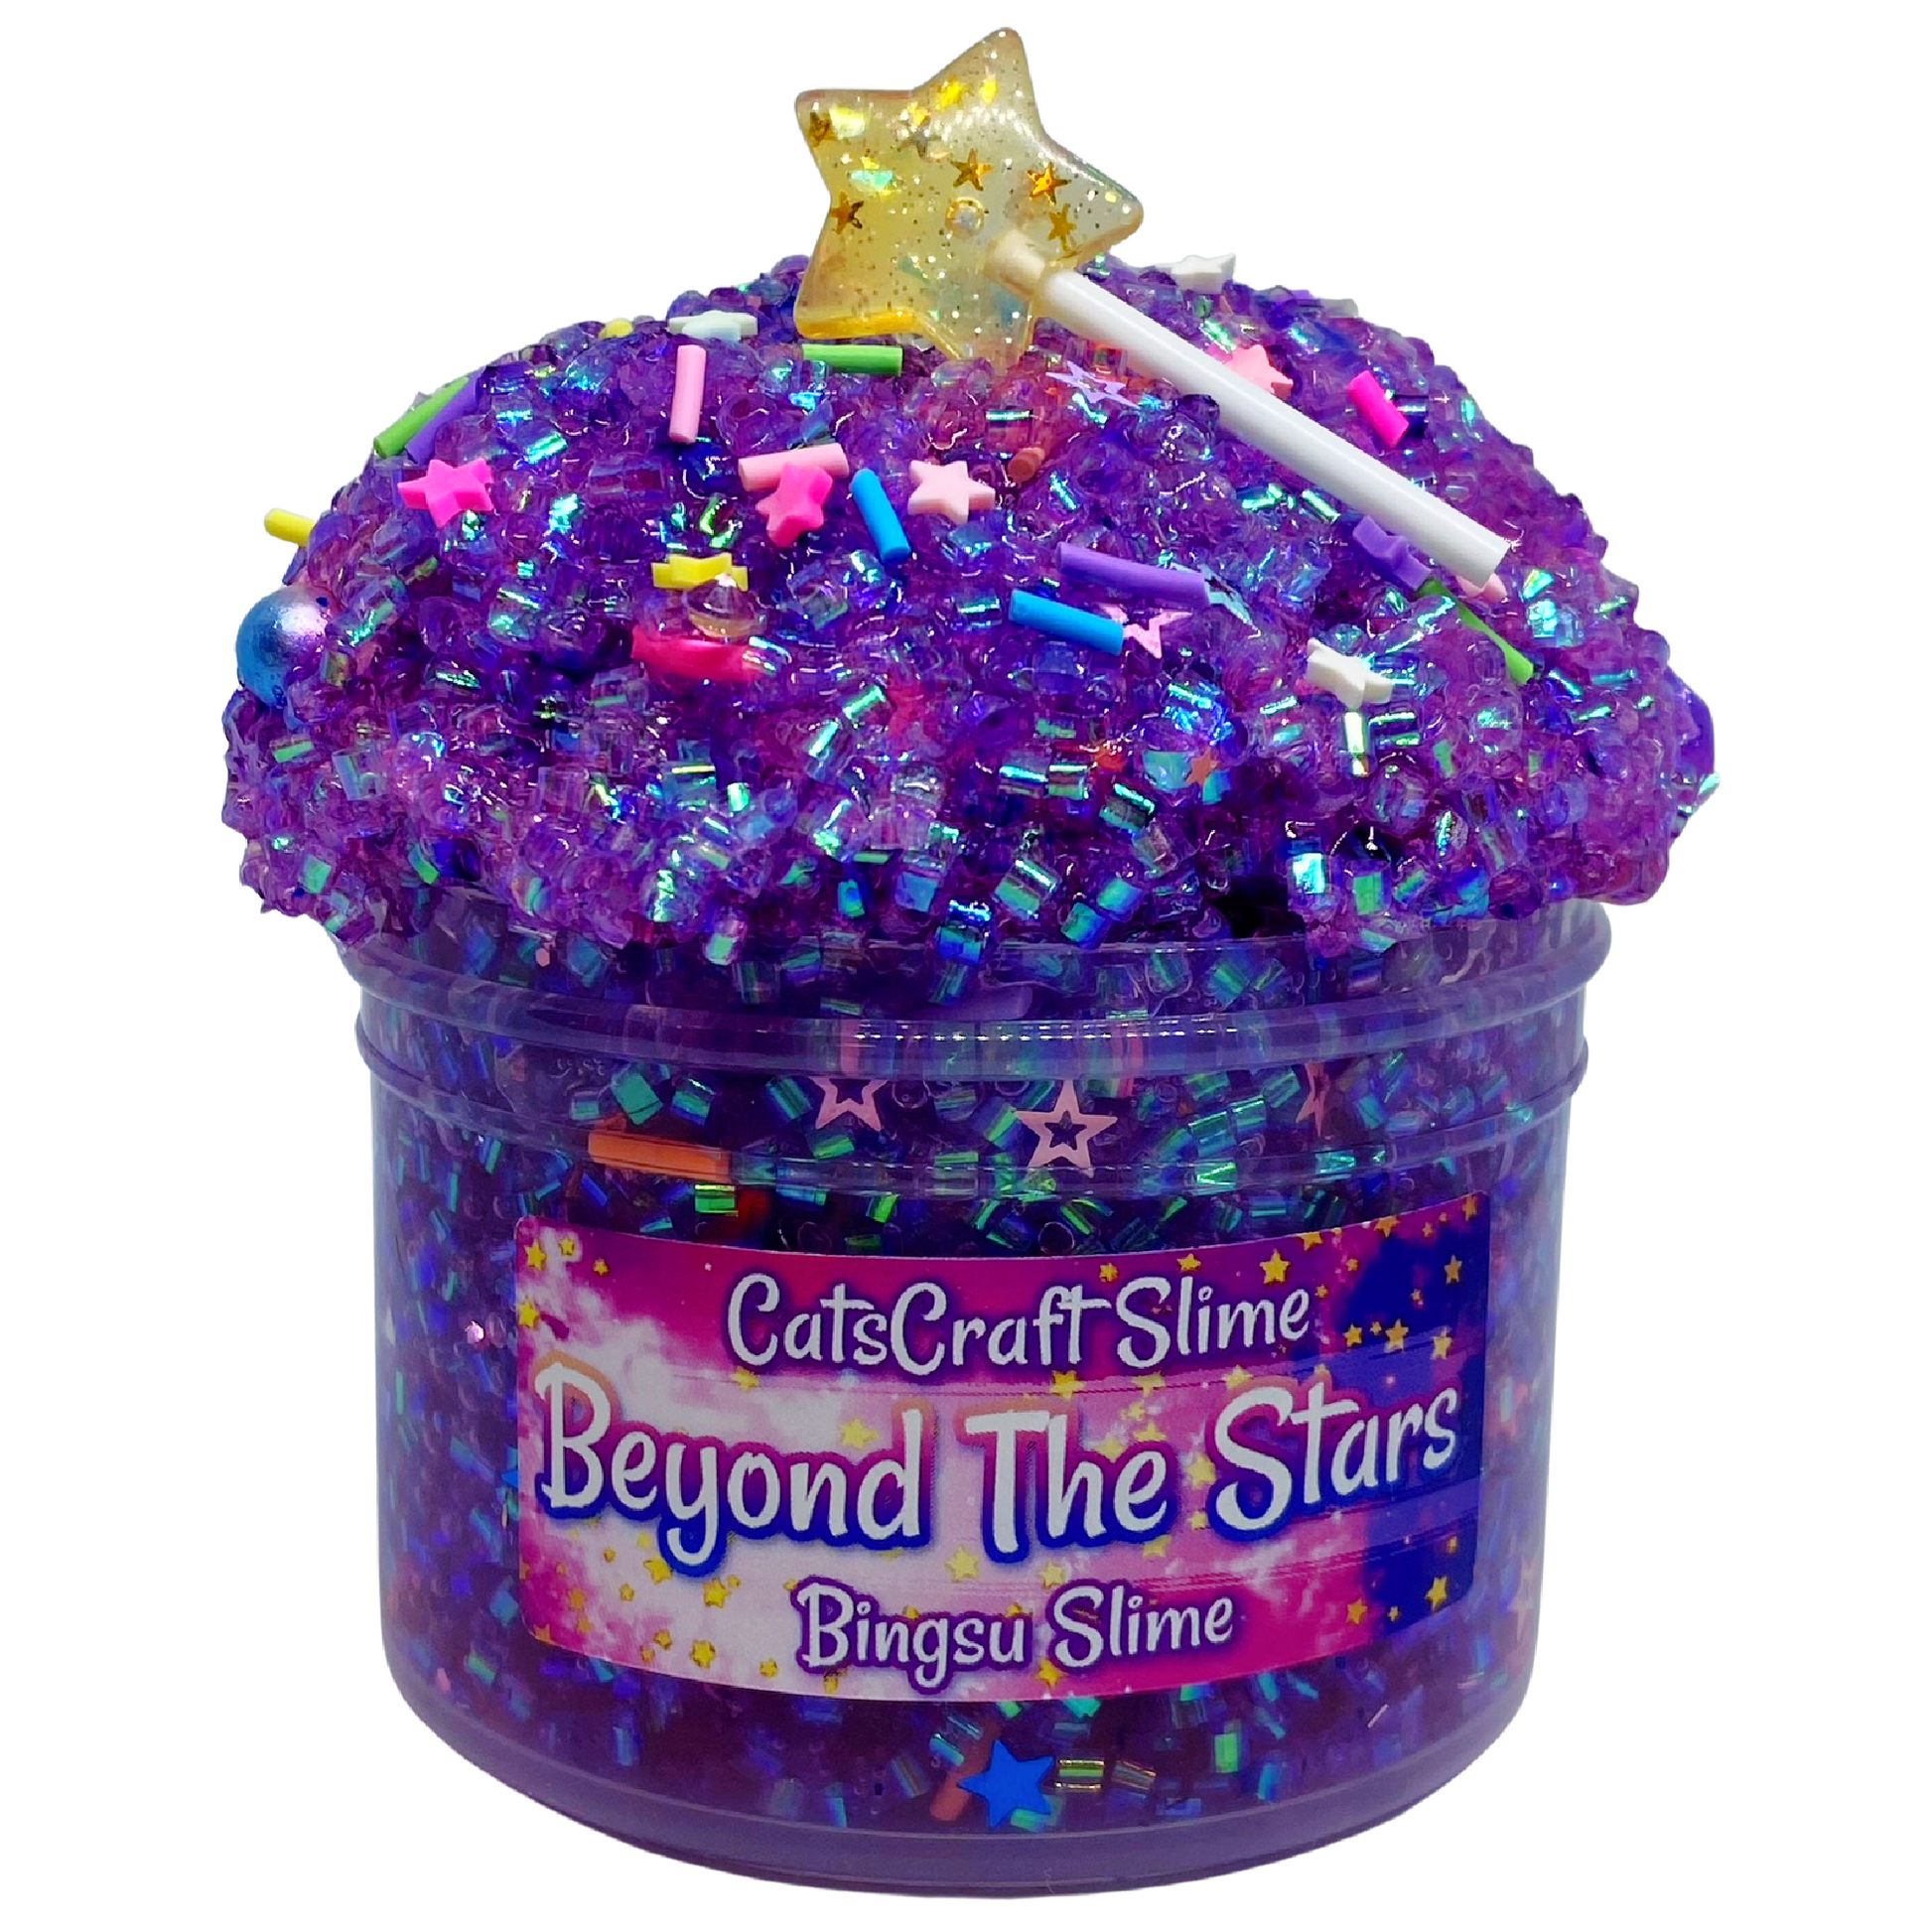 Bingsu Slime Beyond The Stars SCENTED clear bingsu bead crunchy